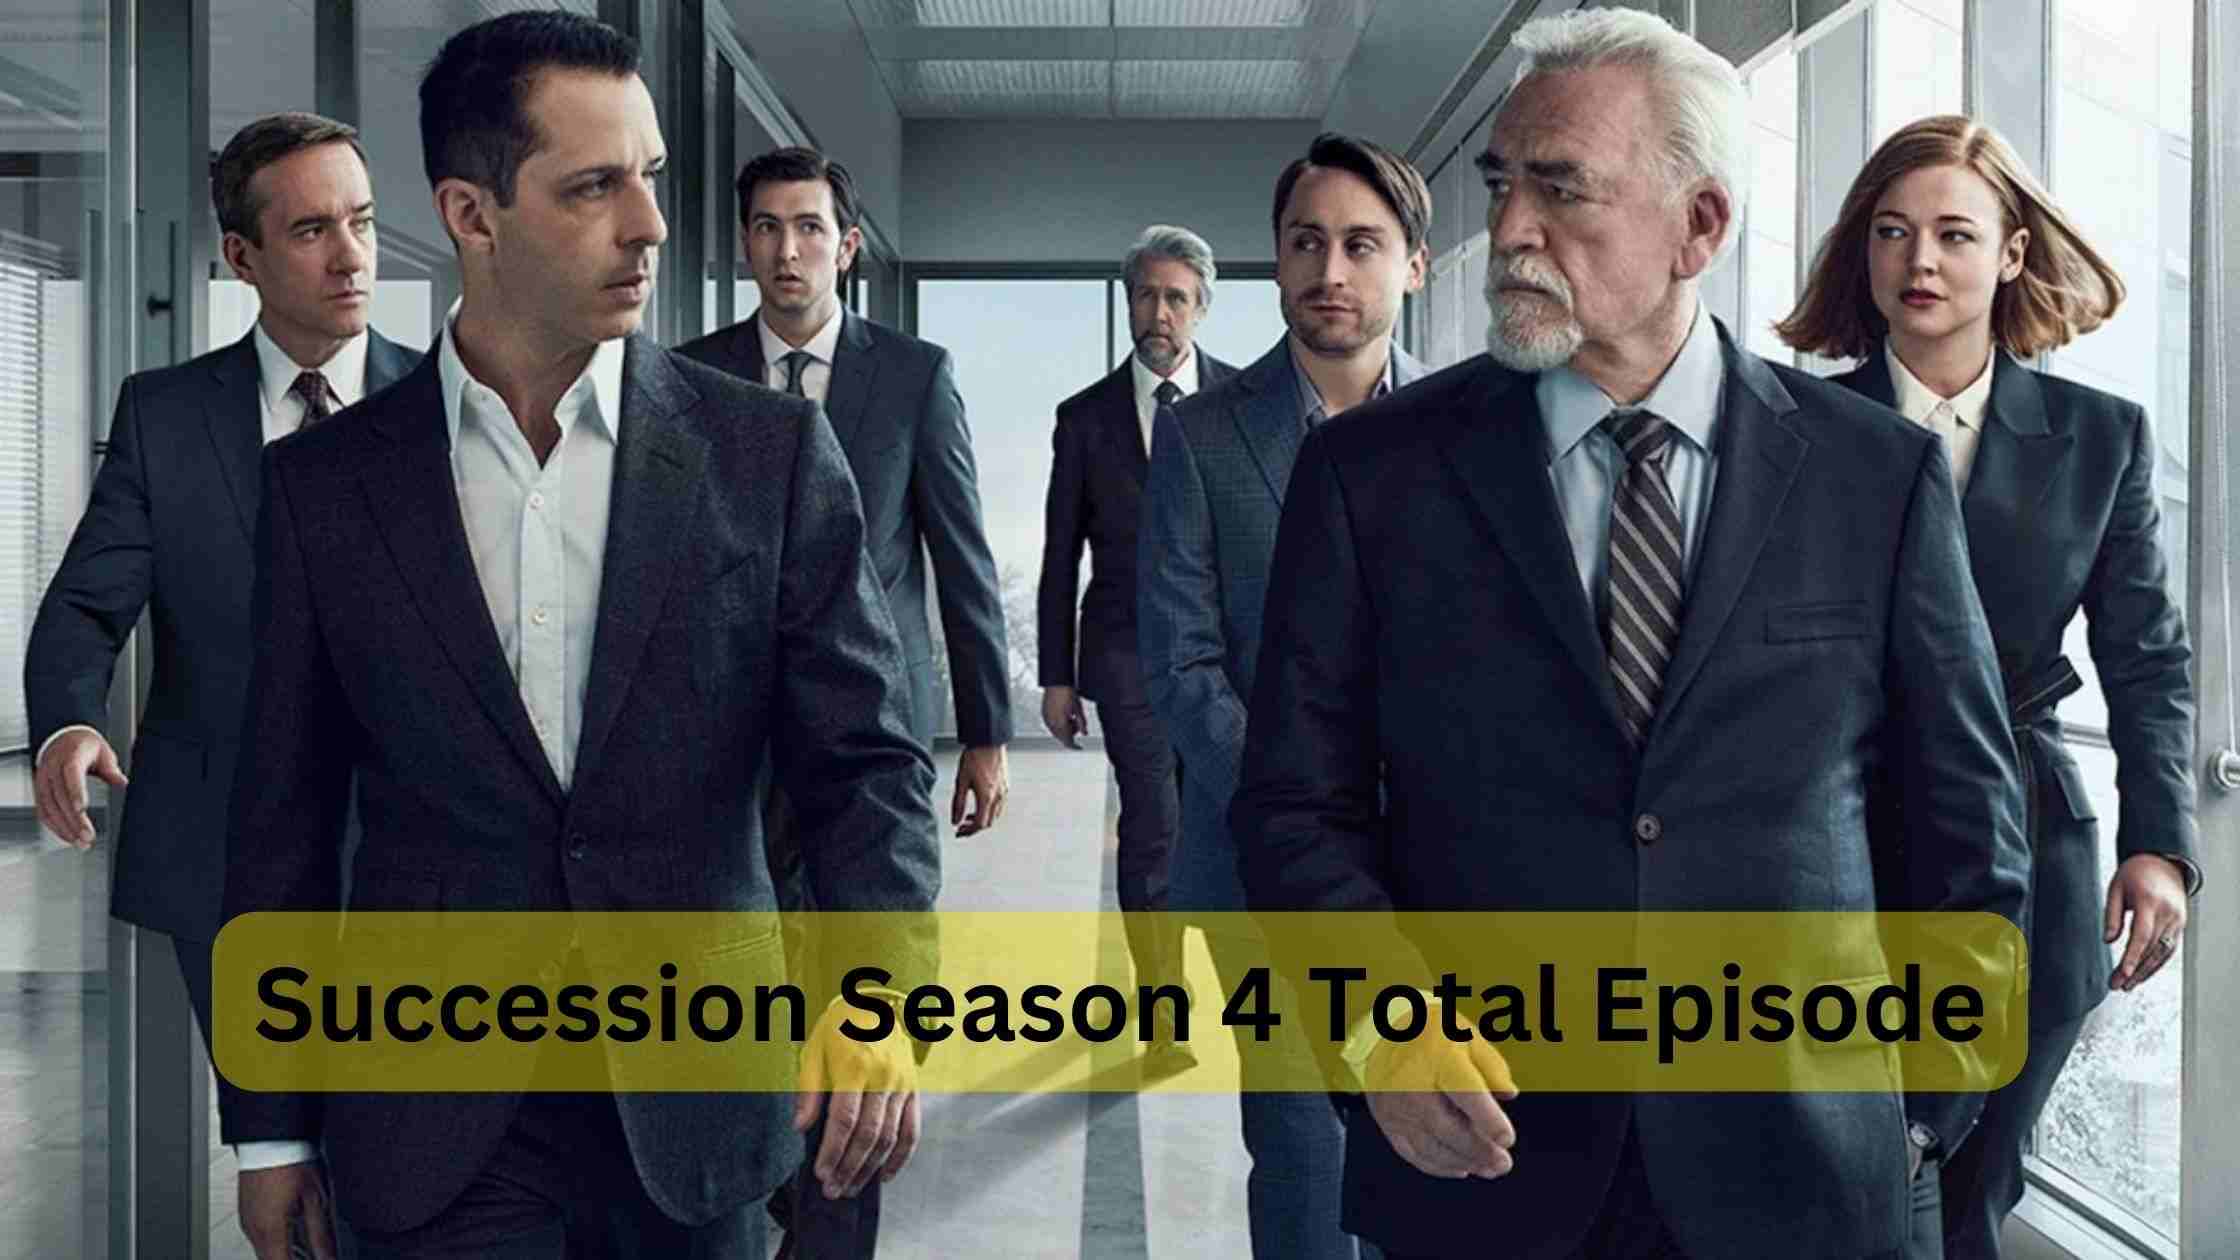 Succession season 4 total episode